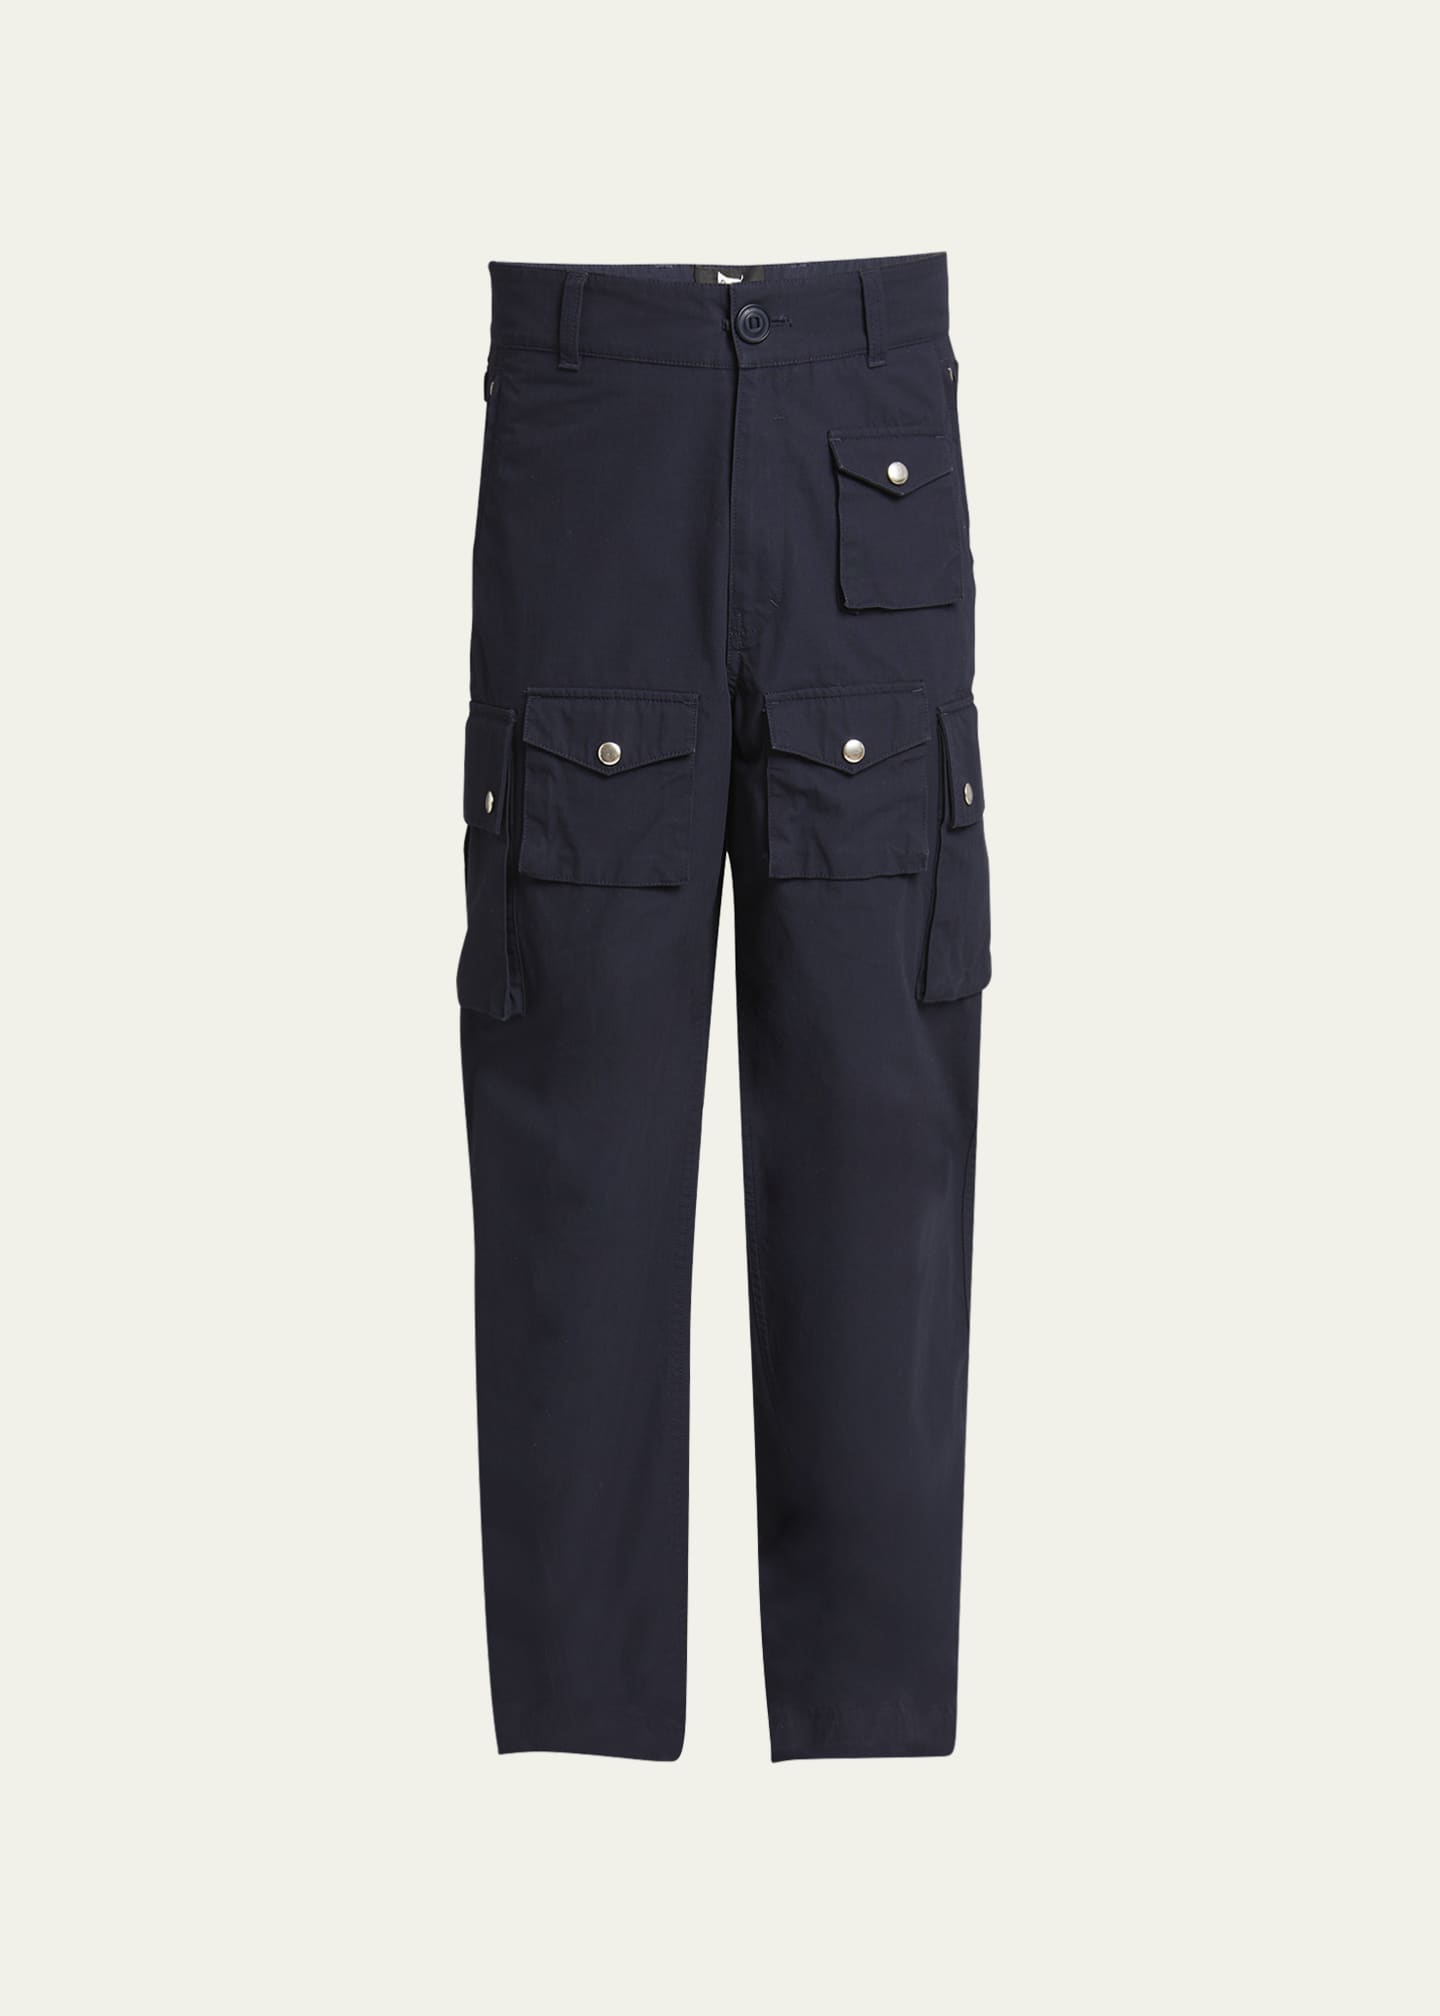 Givenchy Men's Multi-Pocket Cotton Ripstop Cargo Pants - Bergdorf